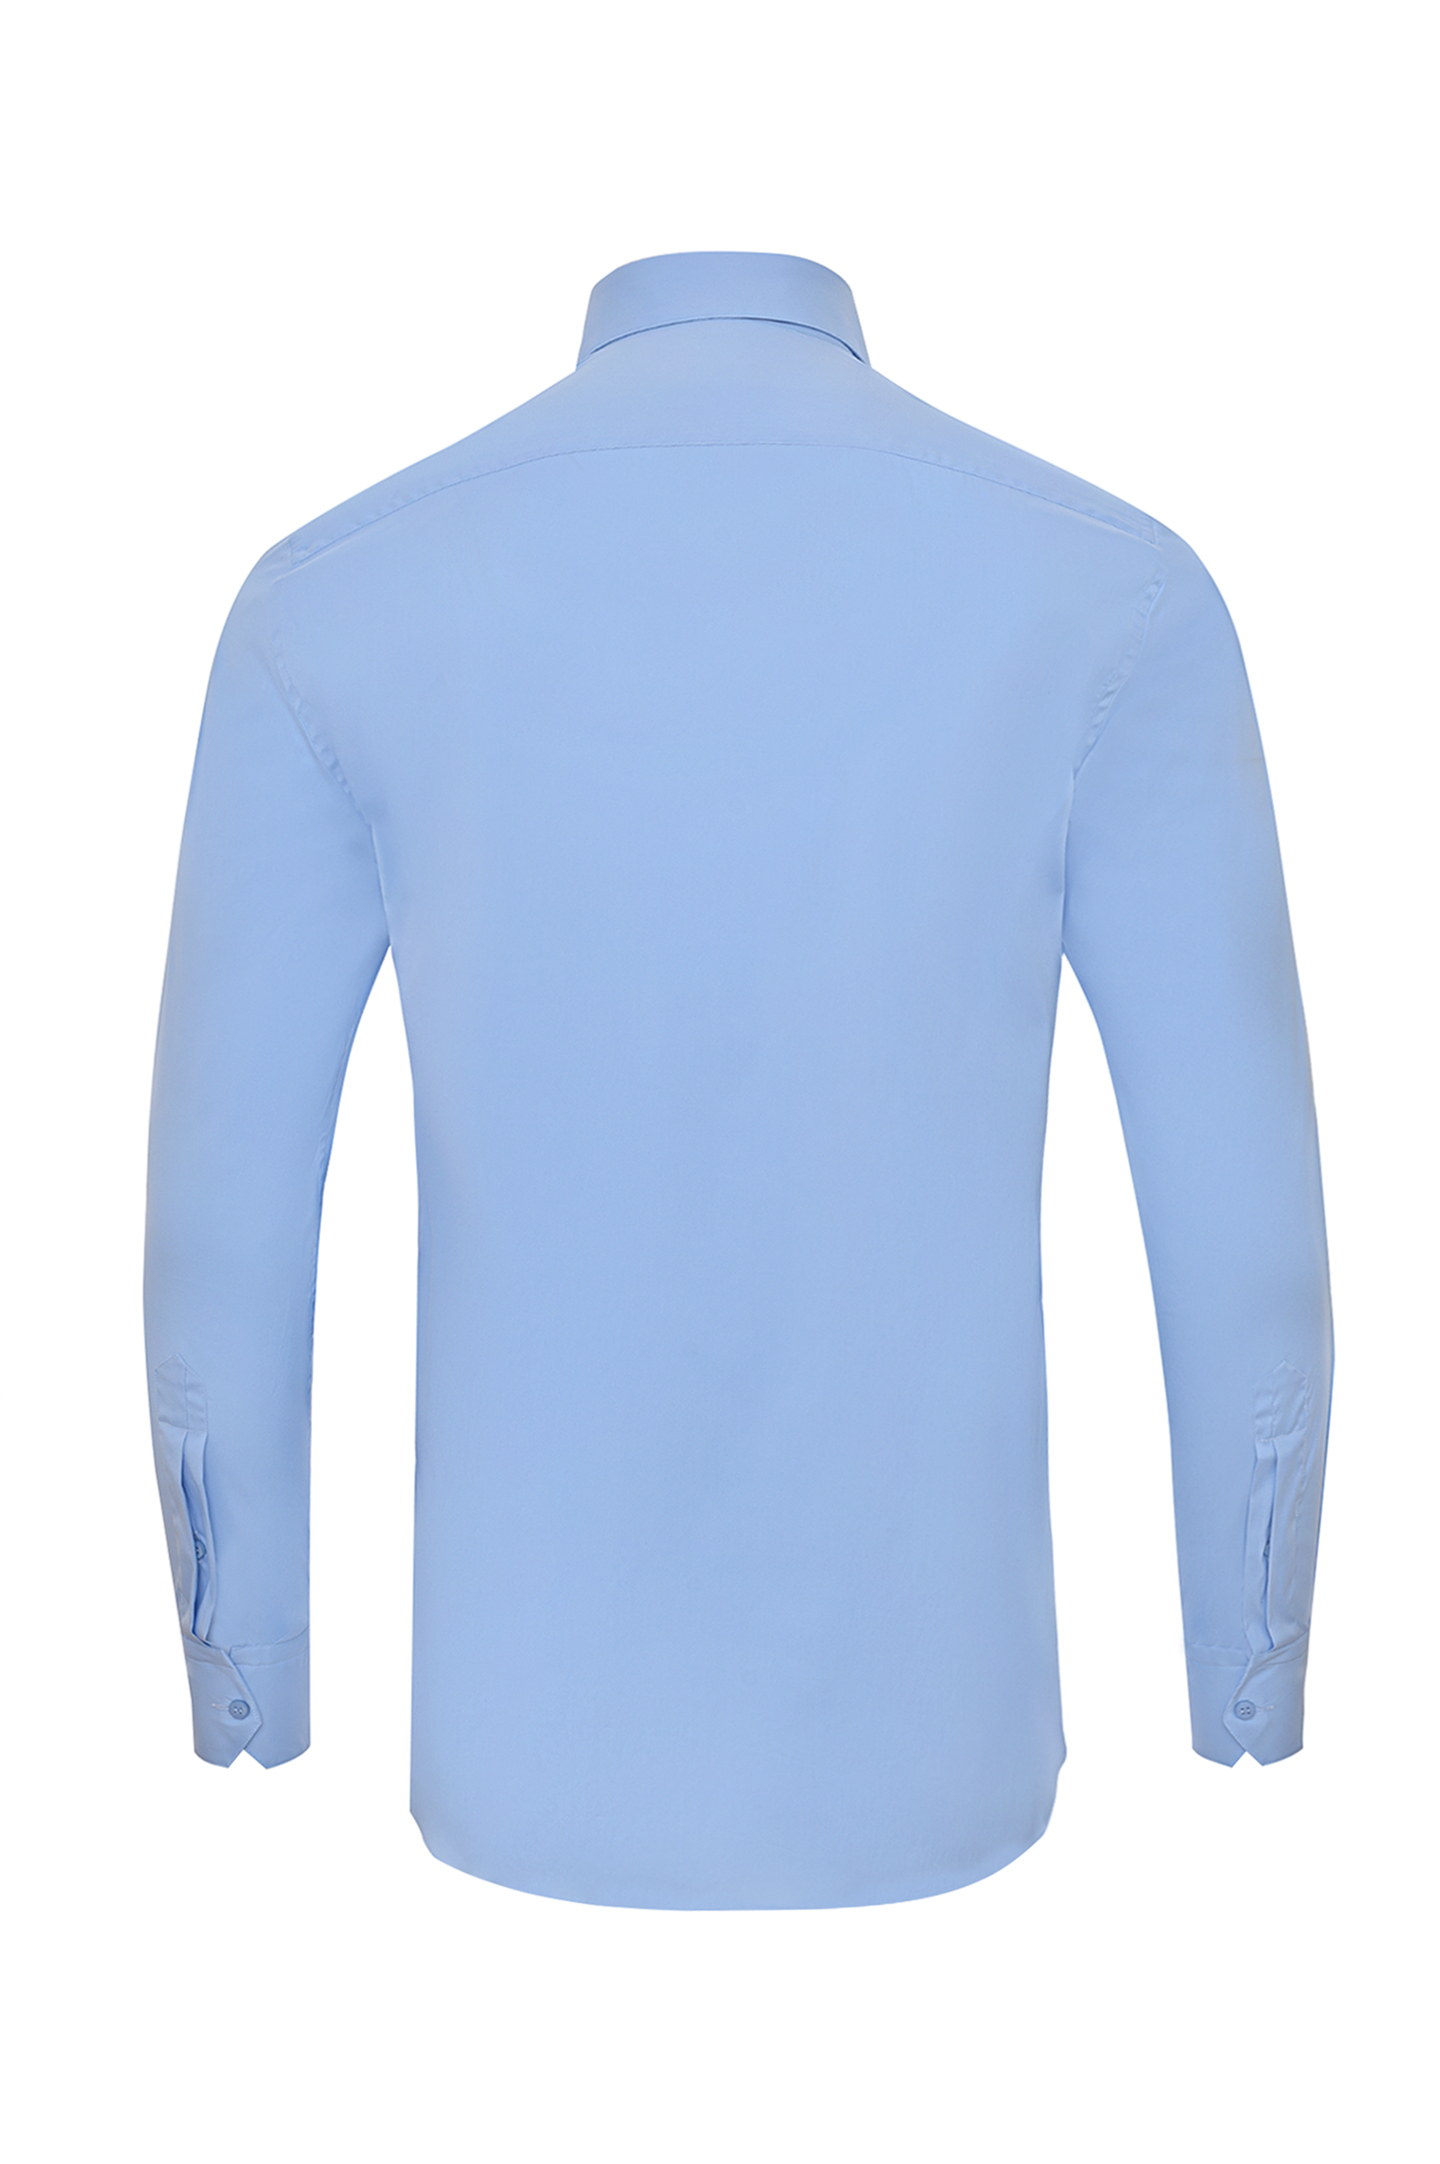 Рубашка STEFANO RICCI MC003678 M1955, цвет: Голубой, Мужской